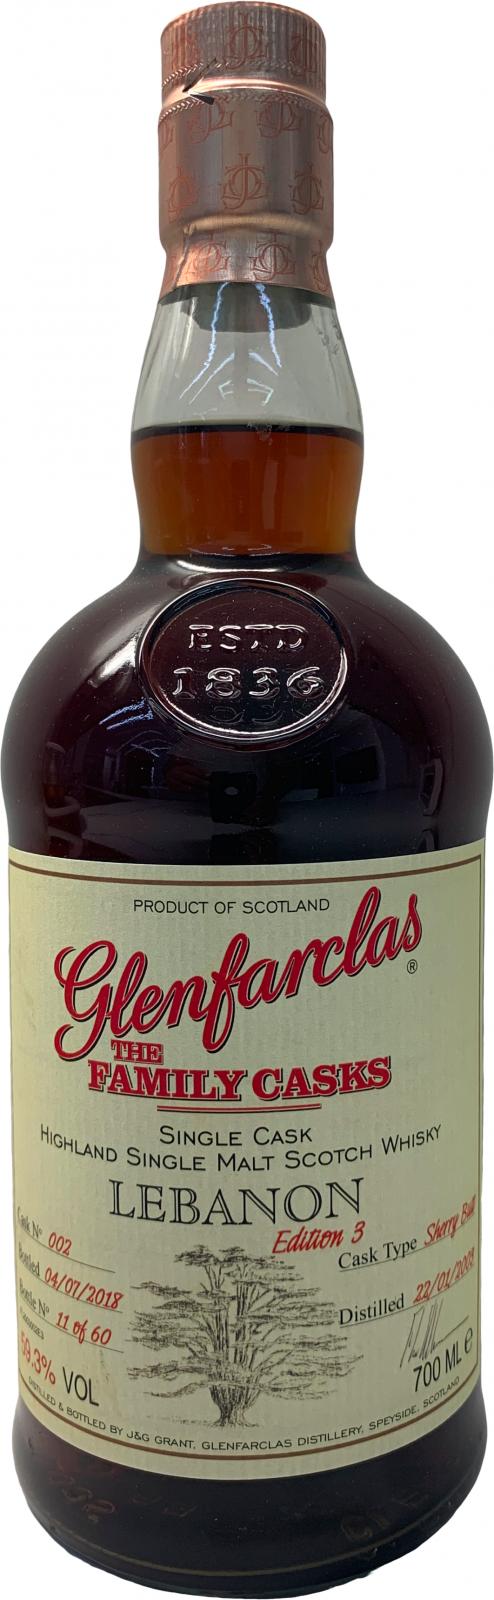 Glenfarclas 2003 The Family Casks Sherry Butt #002 59.3% 700ml